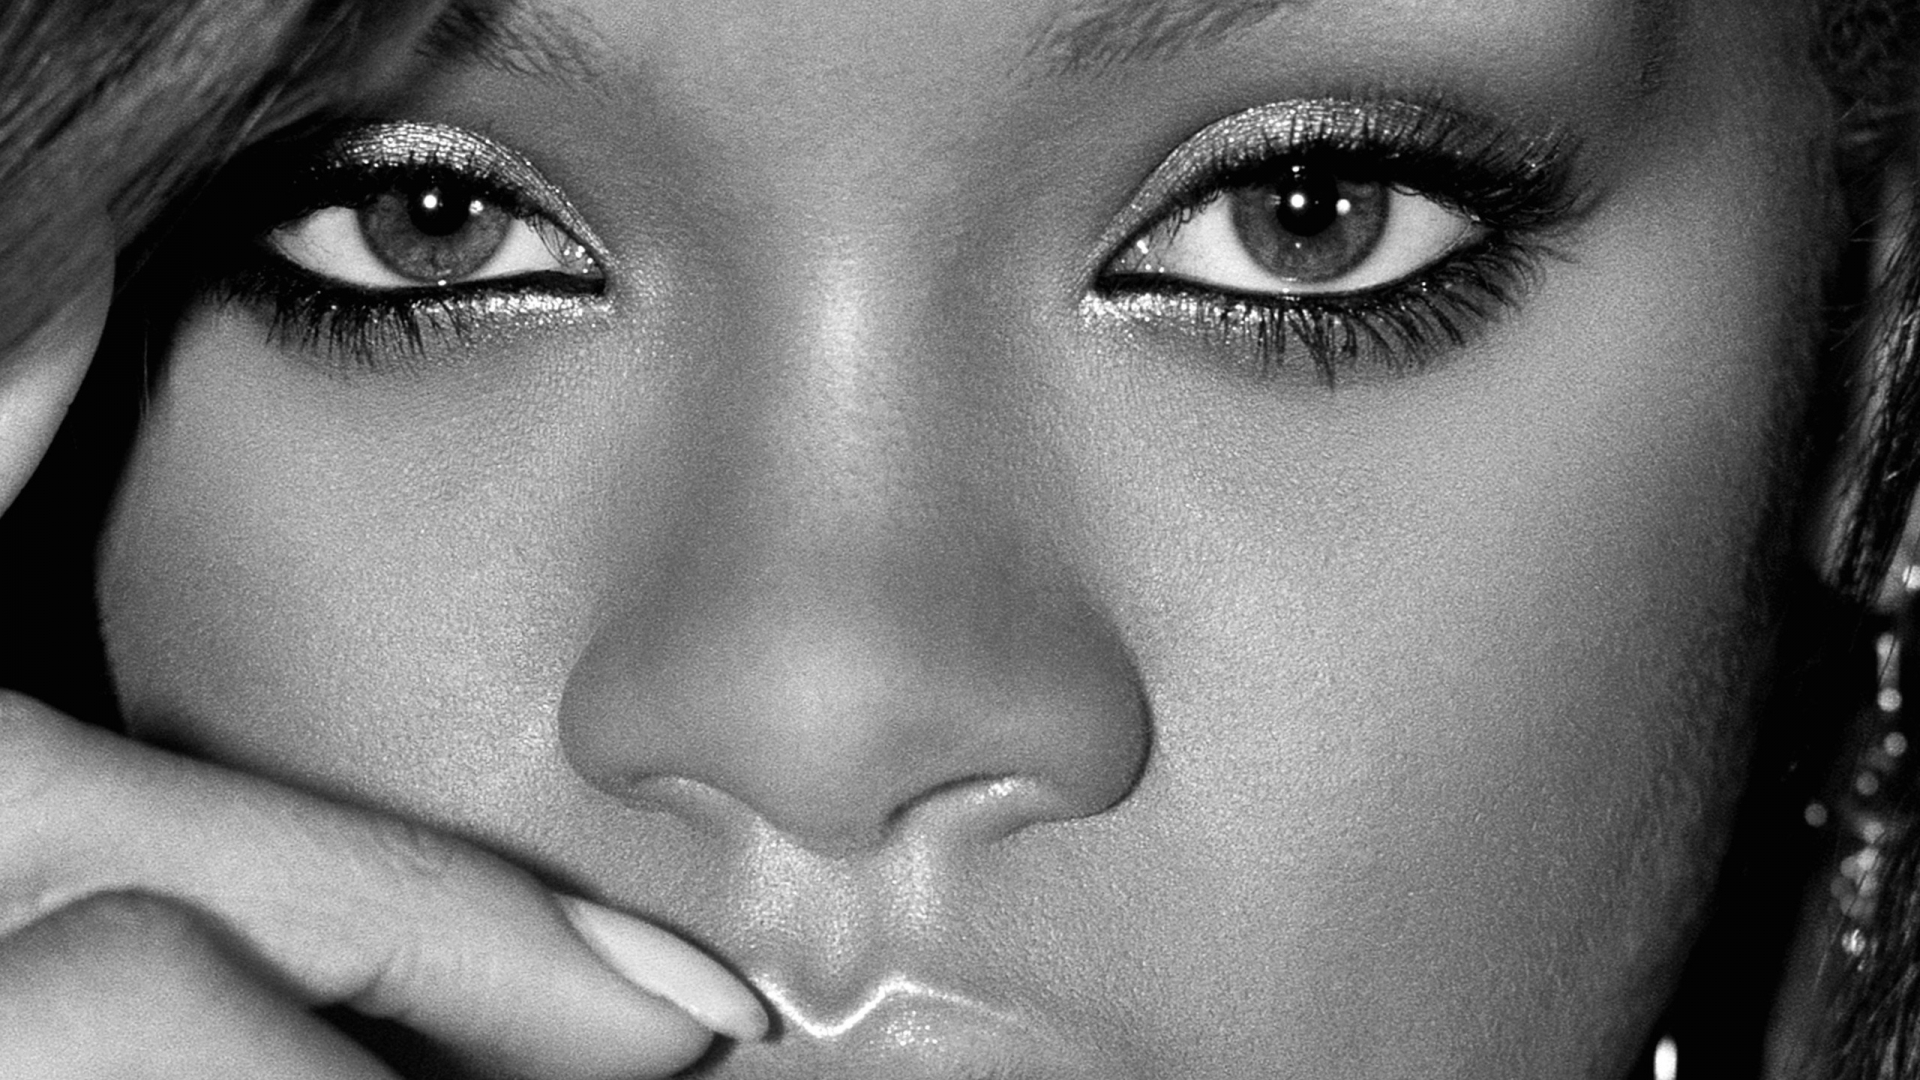 Rihanna Close Up for 1920 x 1080 HDTV 1080p resolution